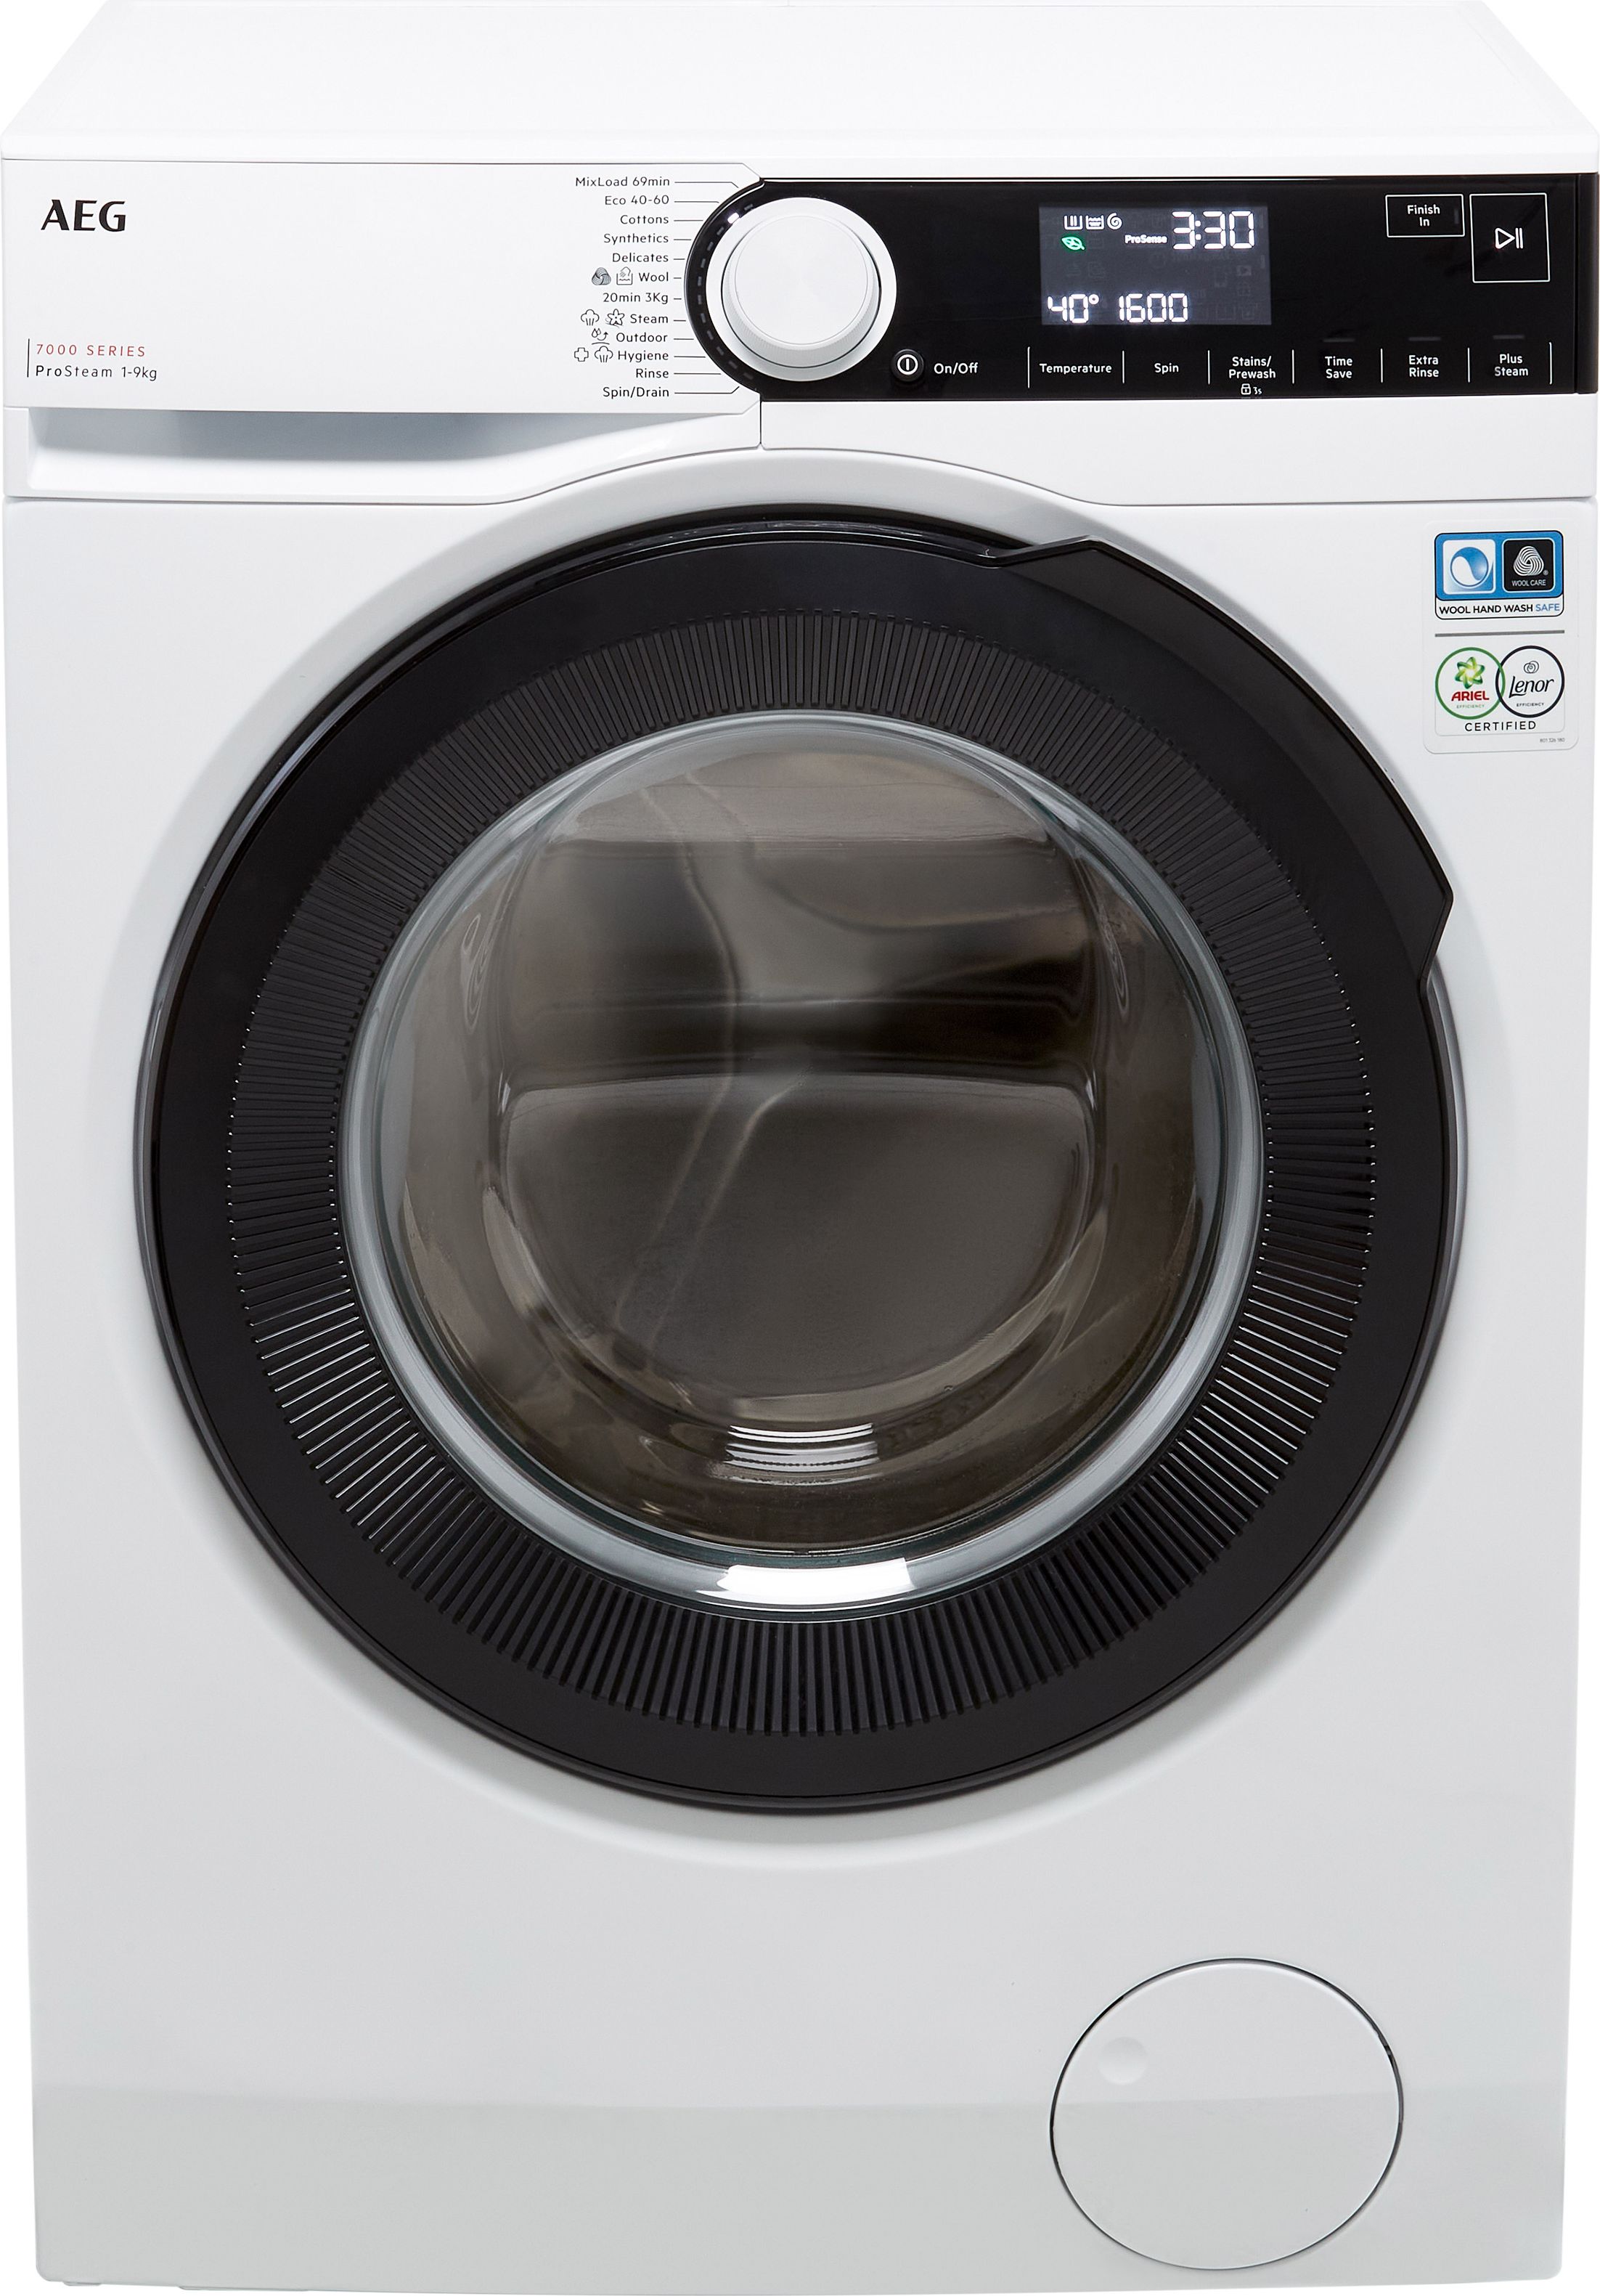 AEG LFR73964B 9kg Washing Machine with 1600 rpm - White - A Rated, White